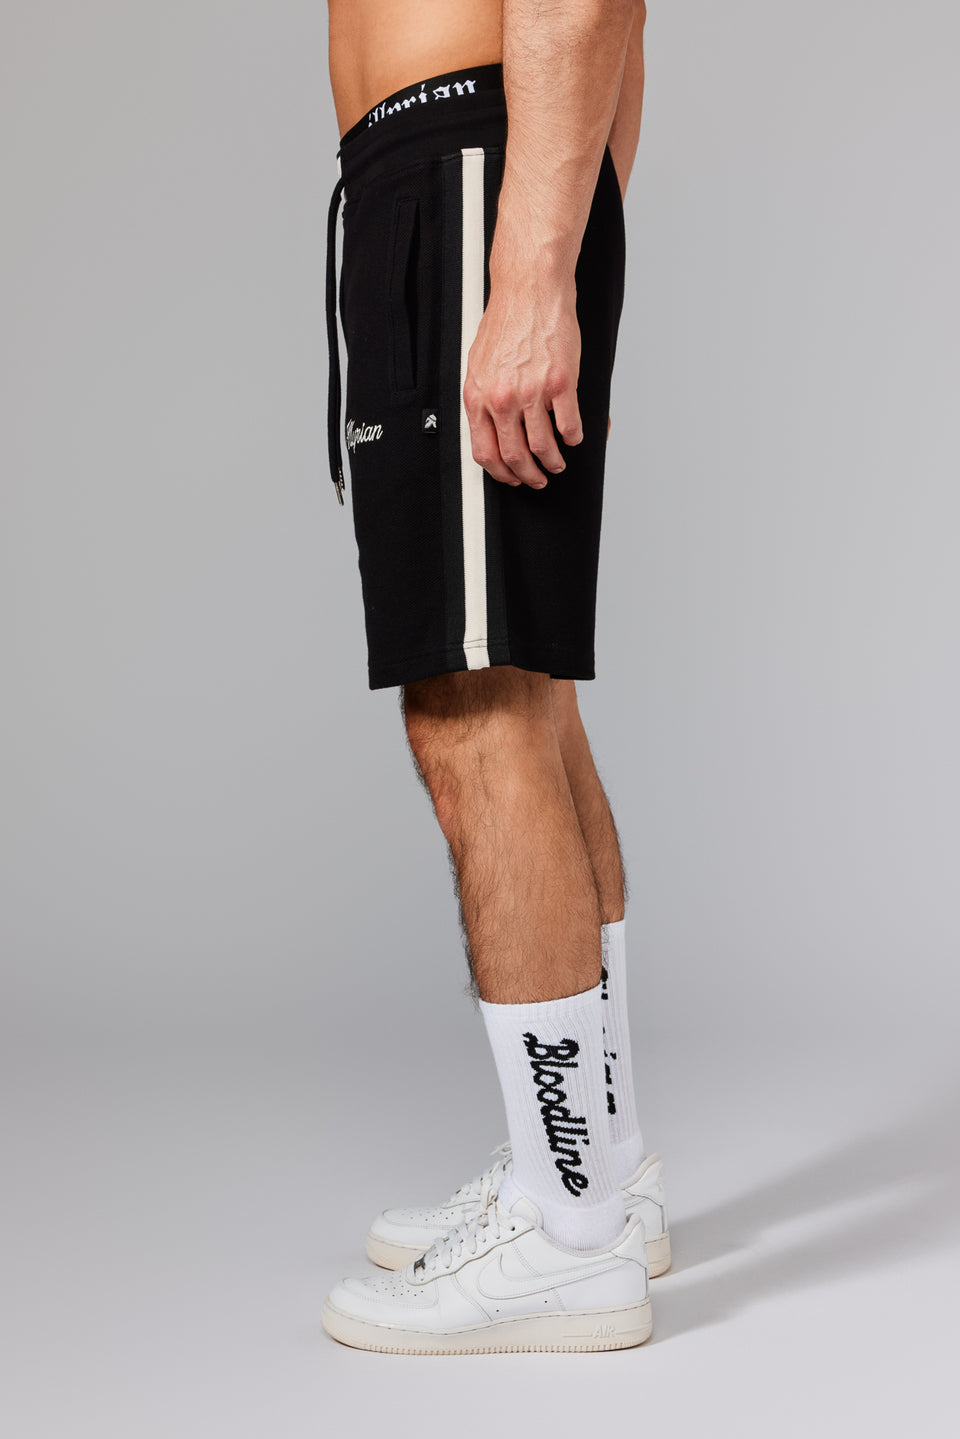 Pique SS24 Shorts - Black